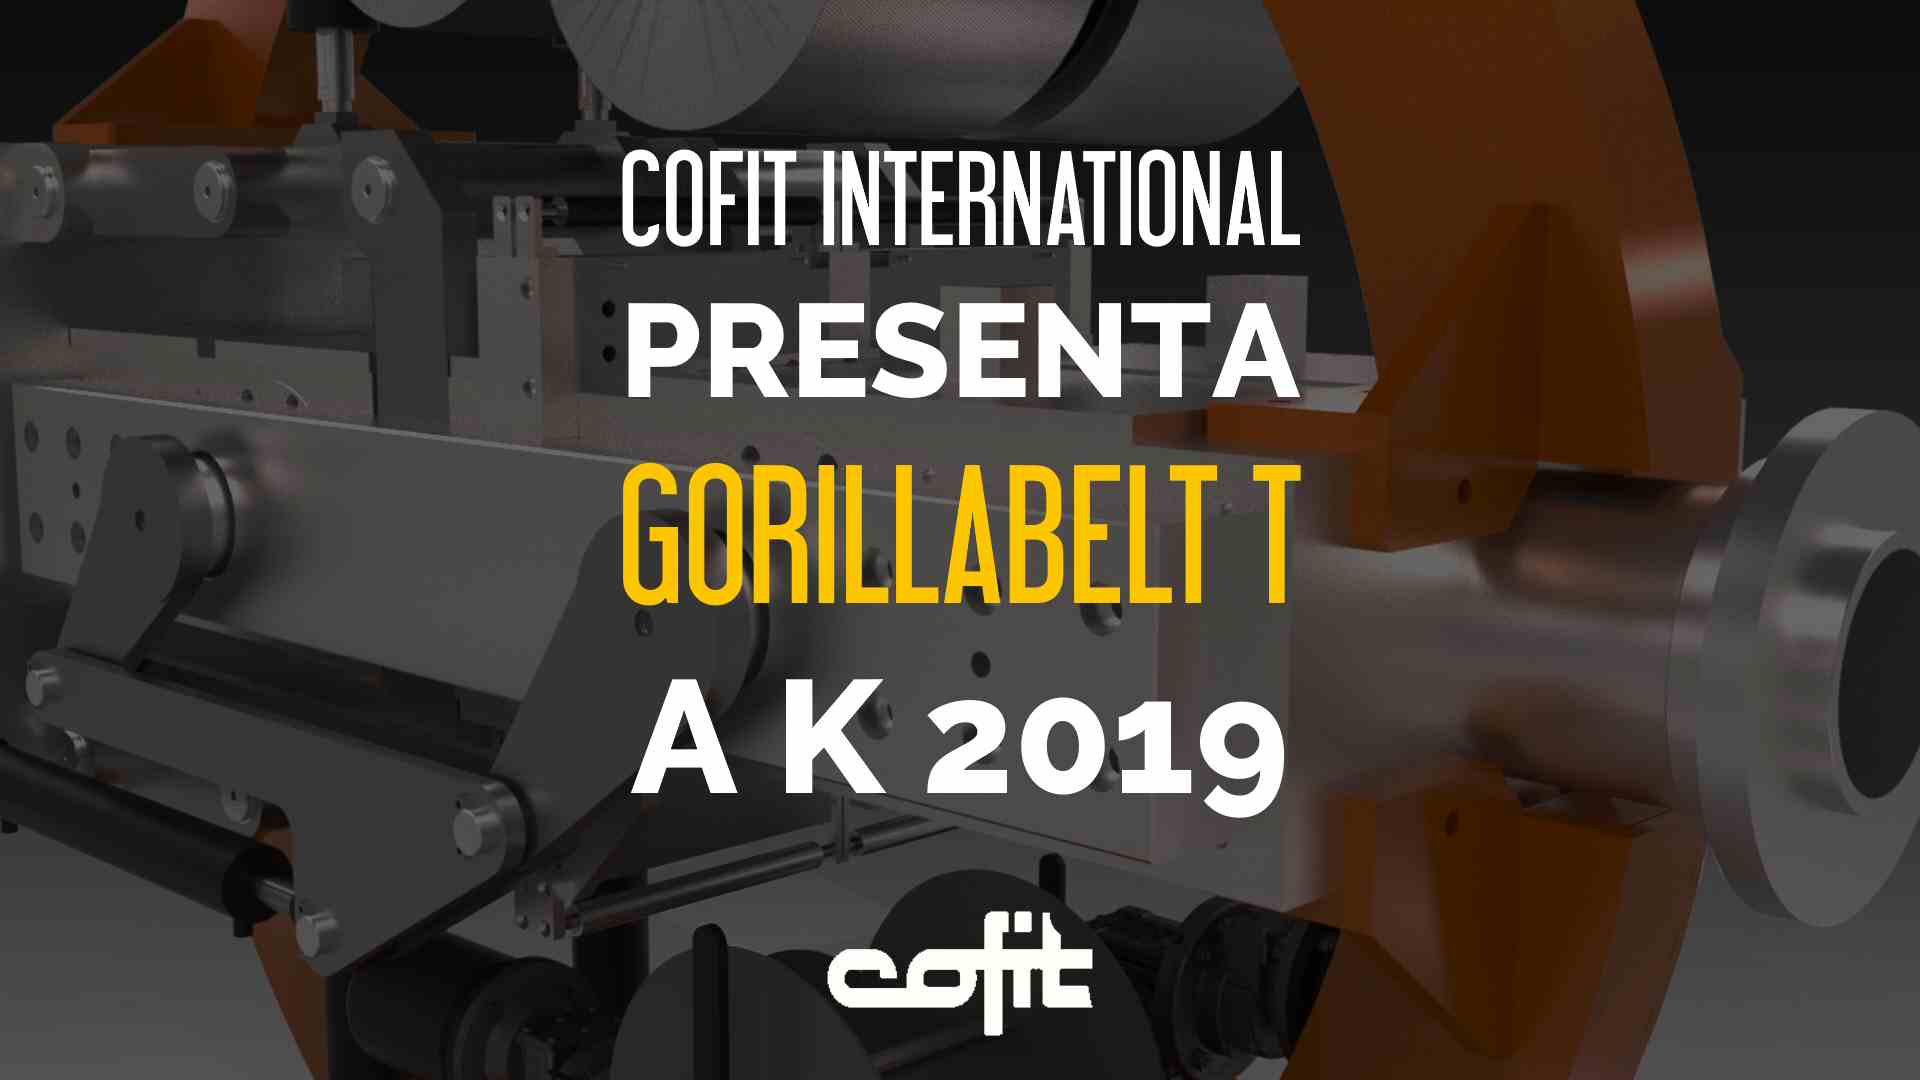 Cofit International presenta Gorillabelt T a K 2019